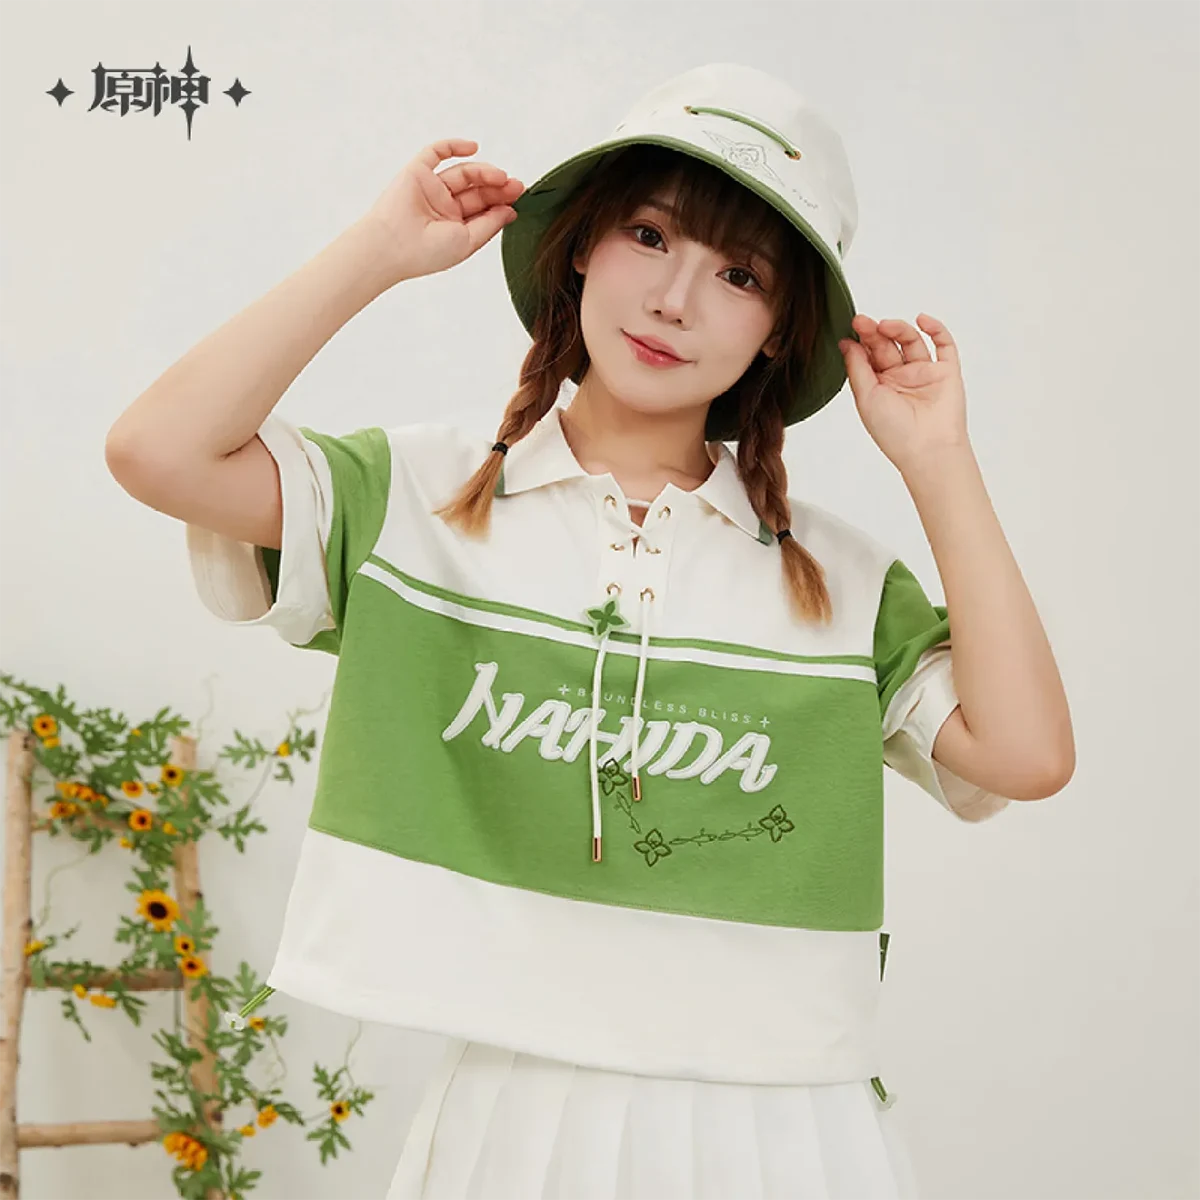 [OFFICIAL MERCHANDISE] Nahida Theme Impressions Series Polo Shirt